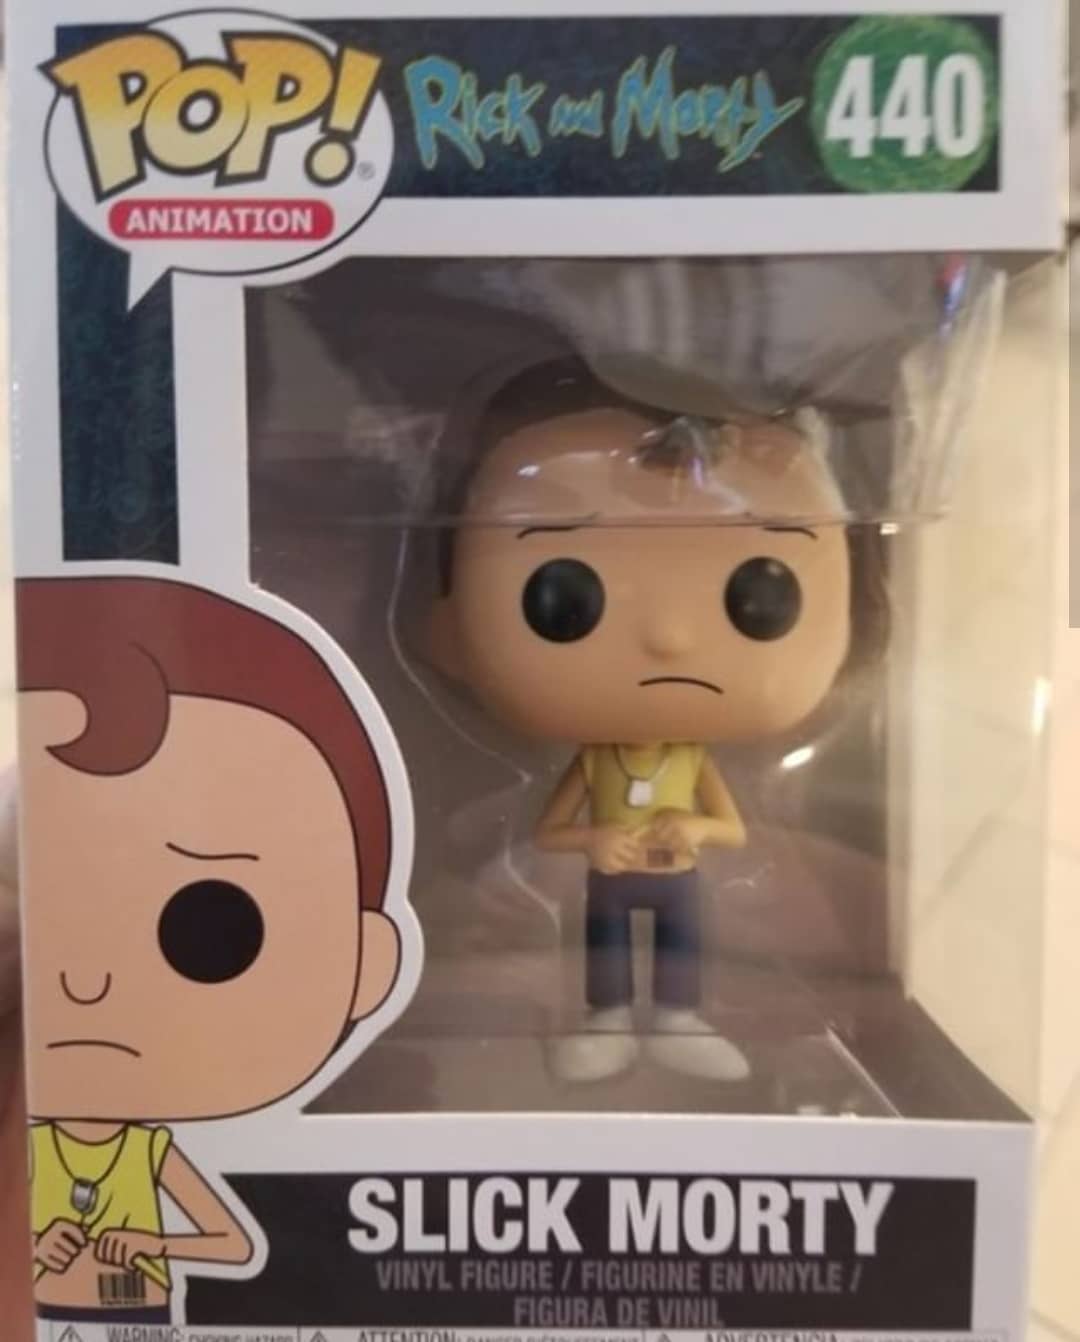 Slick Morty из мультика Rick and Morty